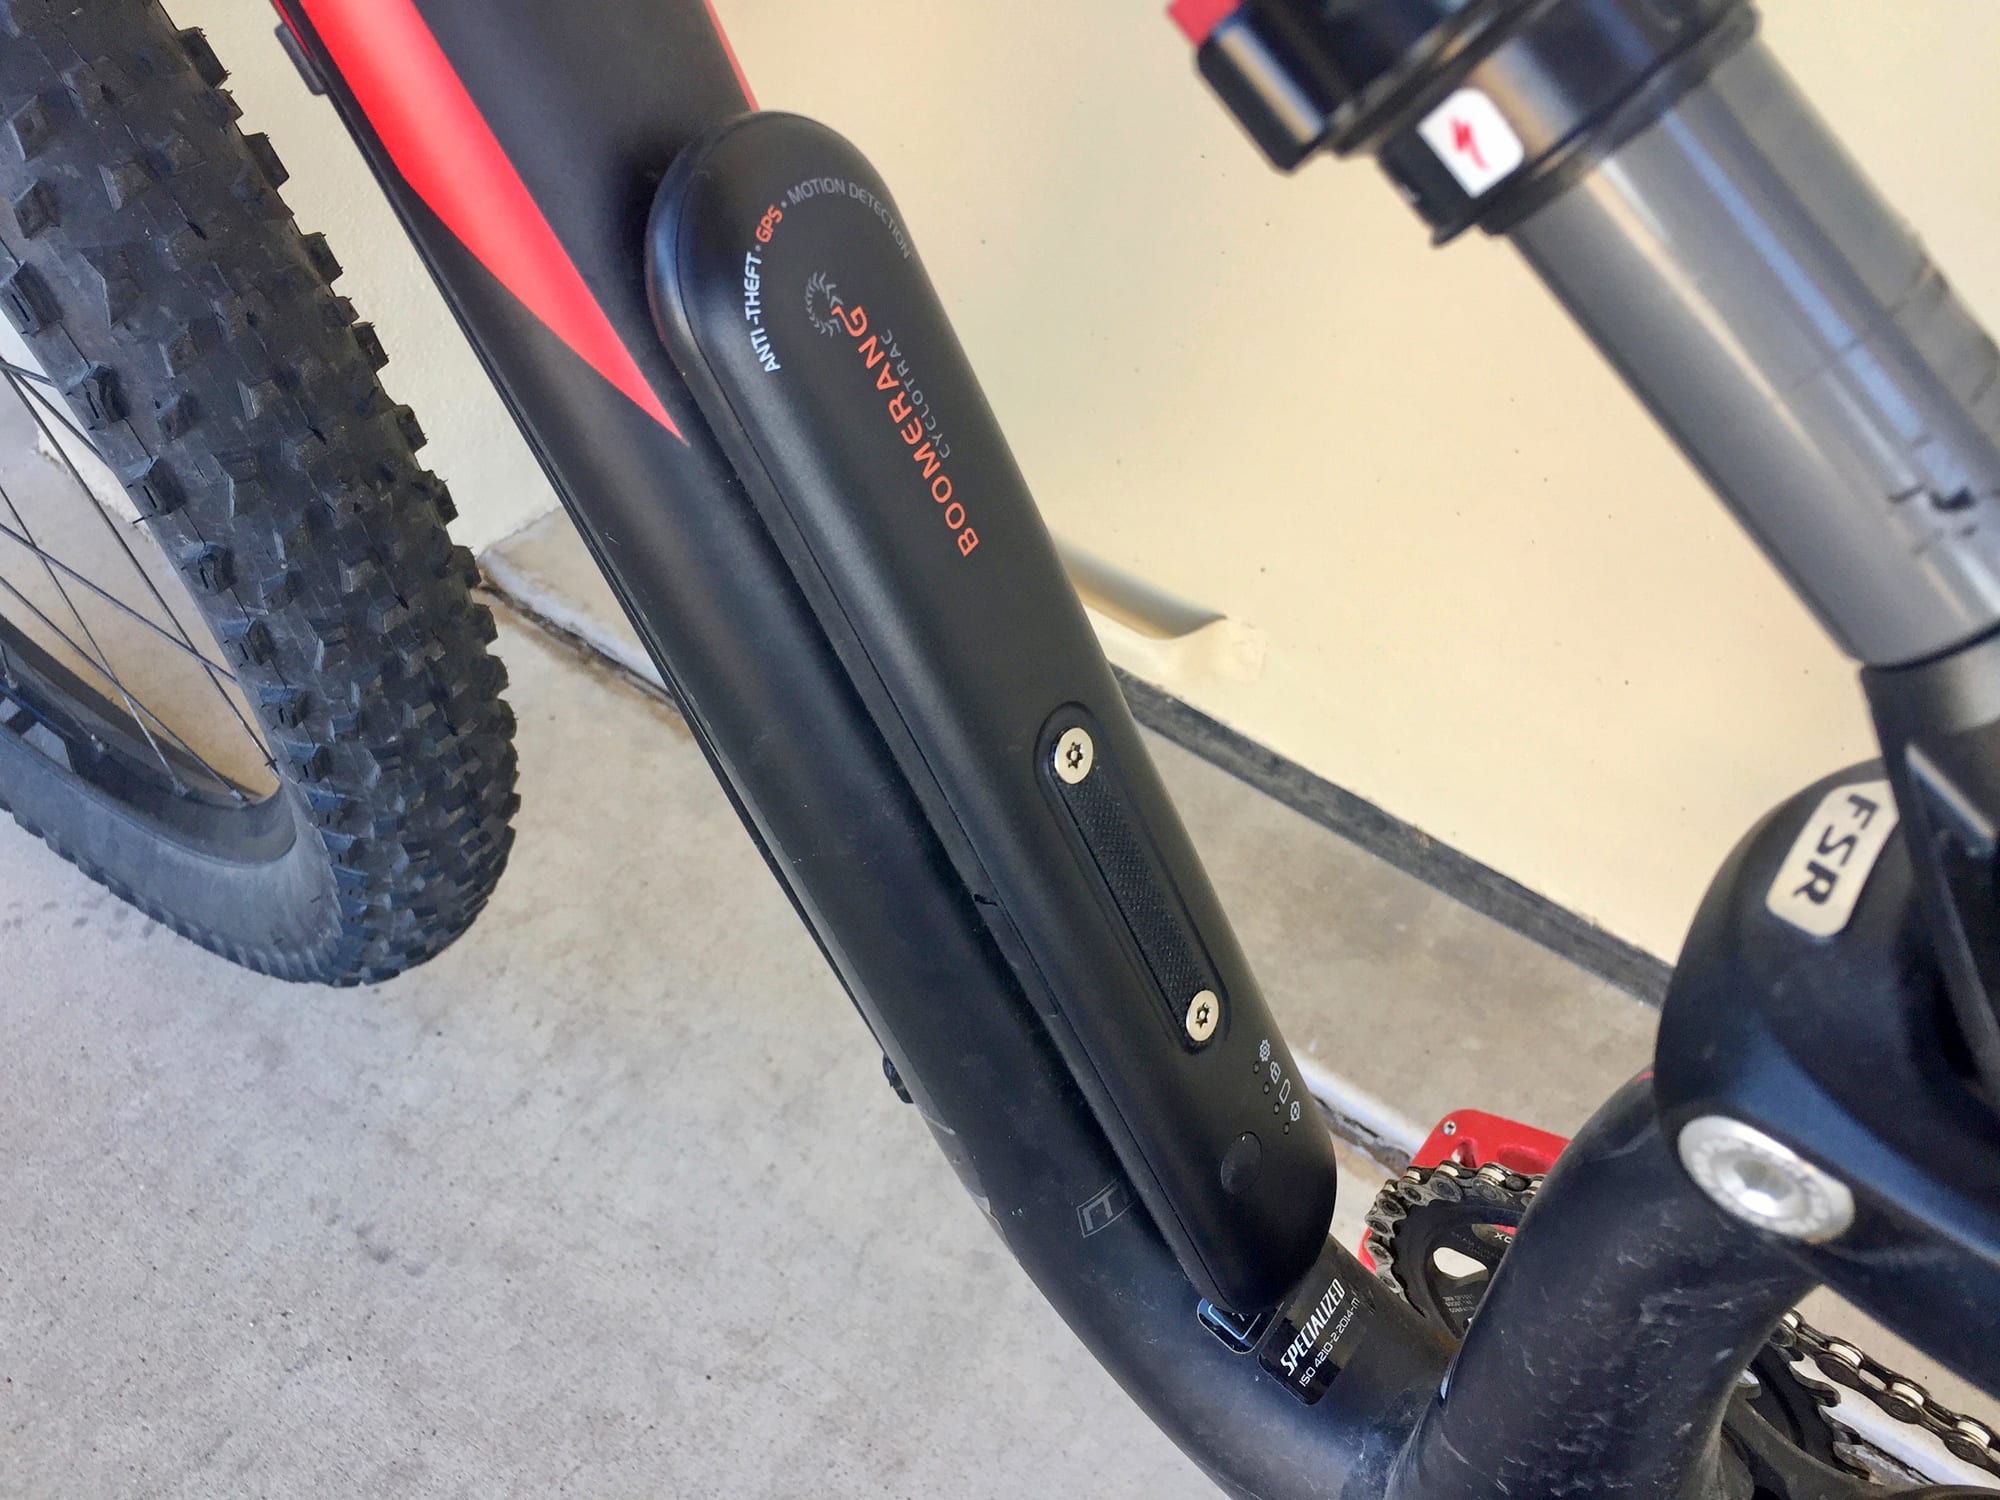 Boomerang GPS Bike Alarm Tracker Review | ElectricBikeReview.com